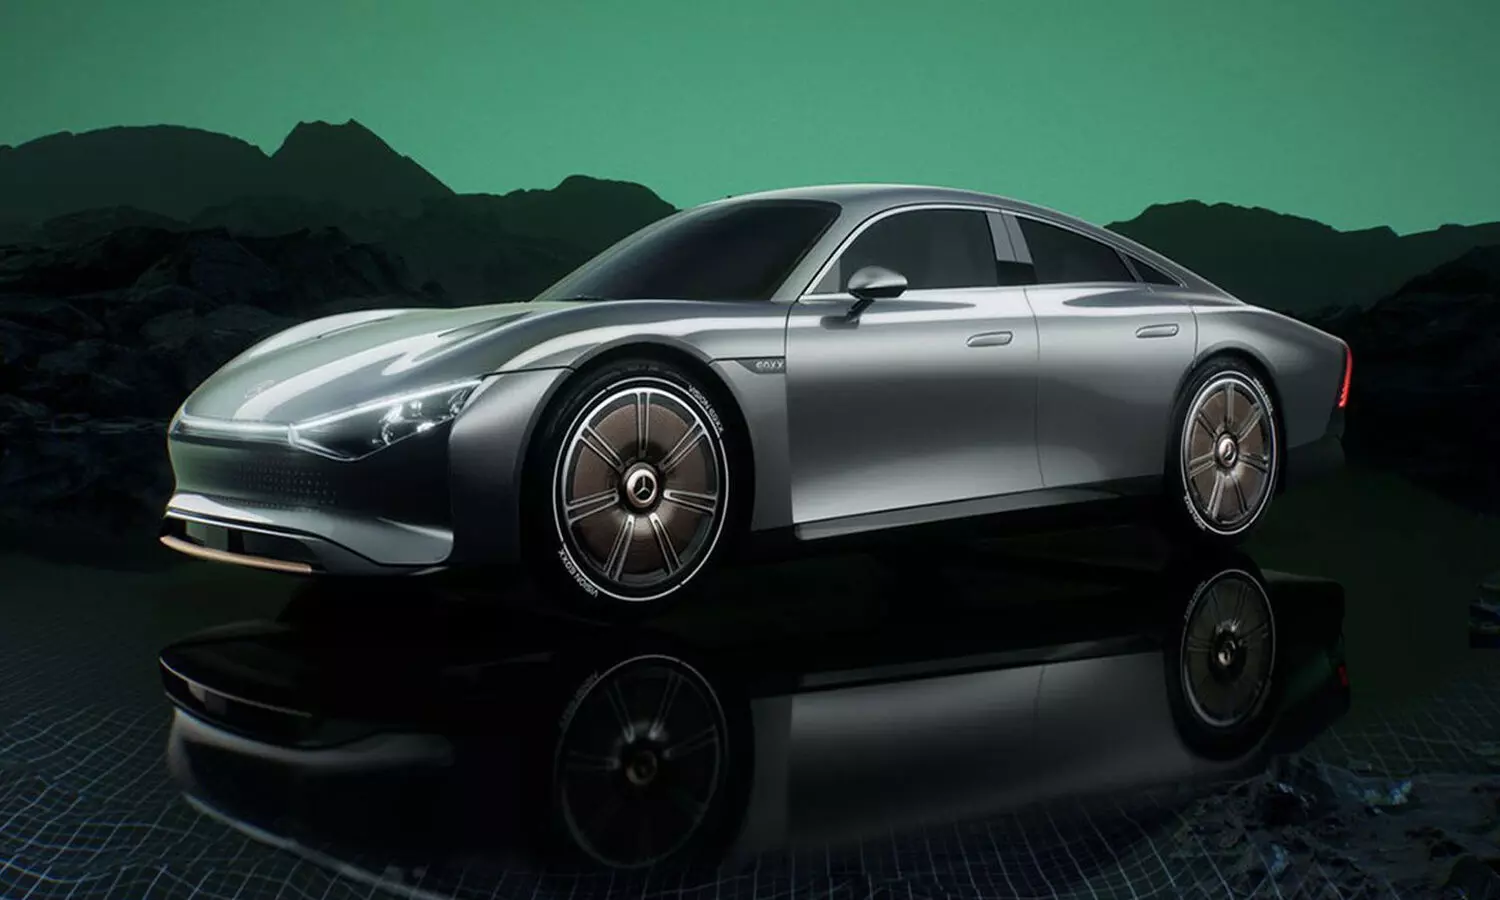 Mercedes Vision EQXX Concept Car